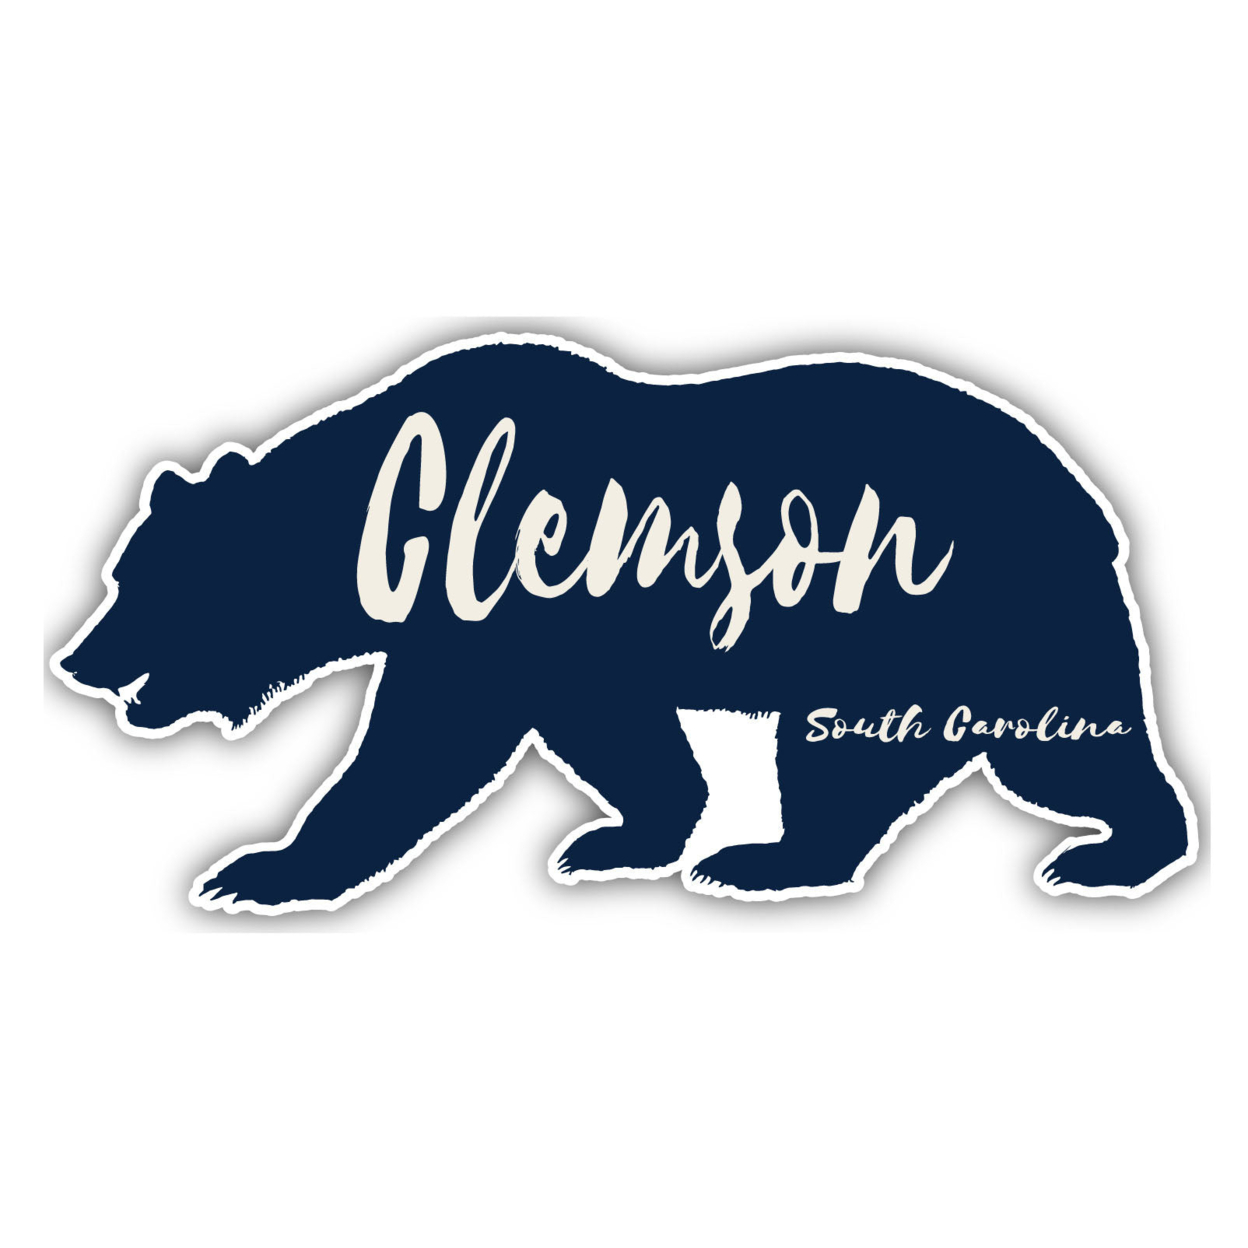 Clemson South Carolina Souvenir Decorative Stickers (Choose Theme And Size) - Single Unit, 12-Inch, Tent